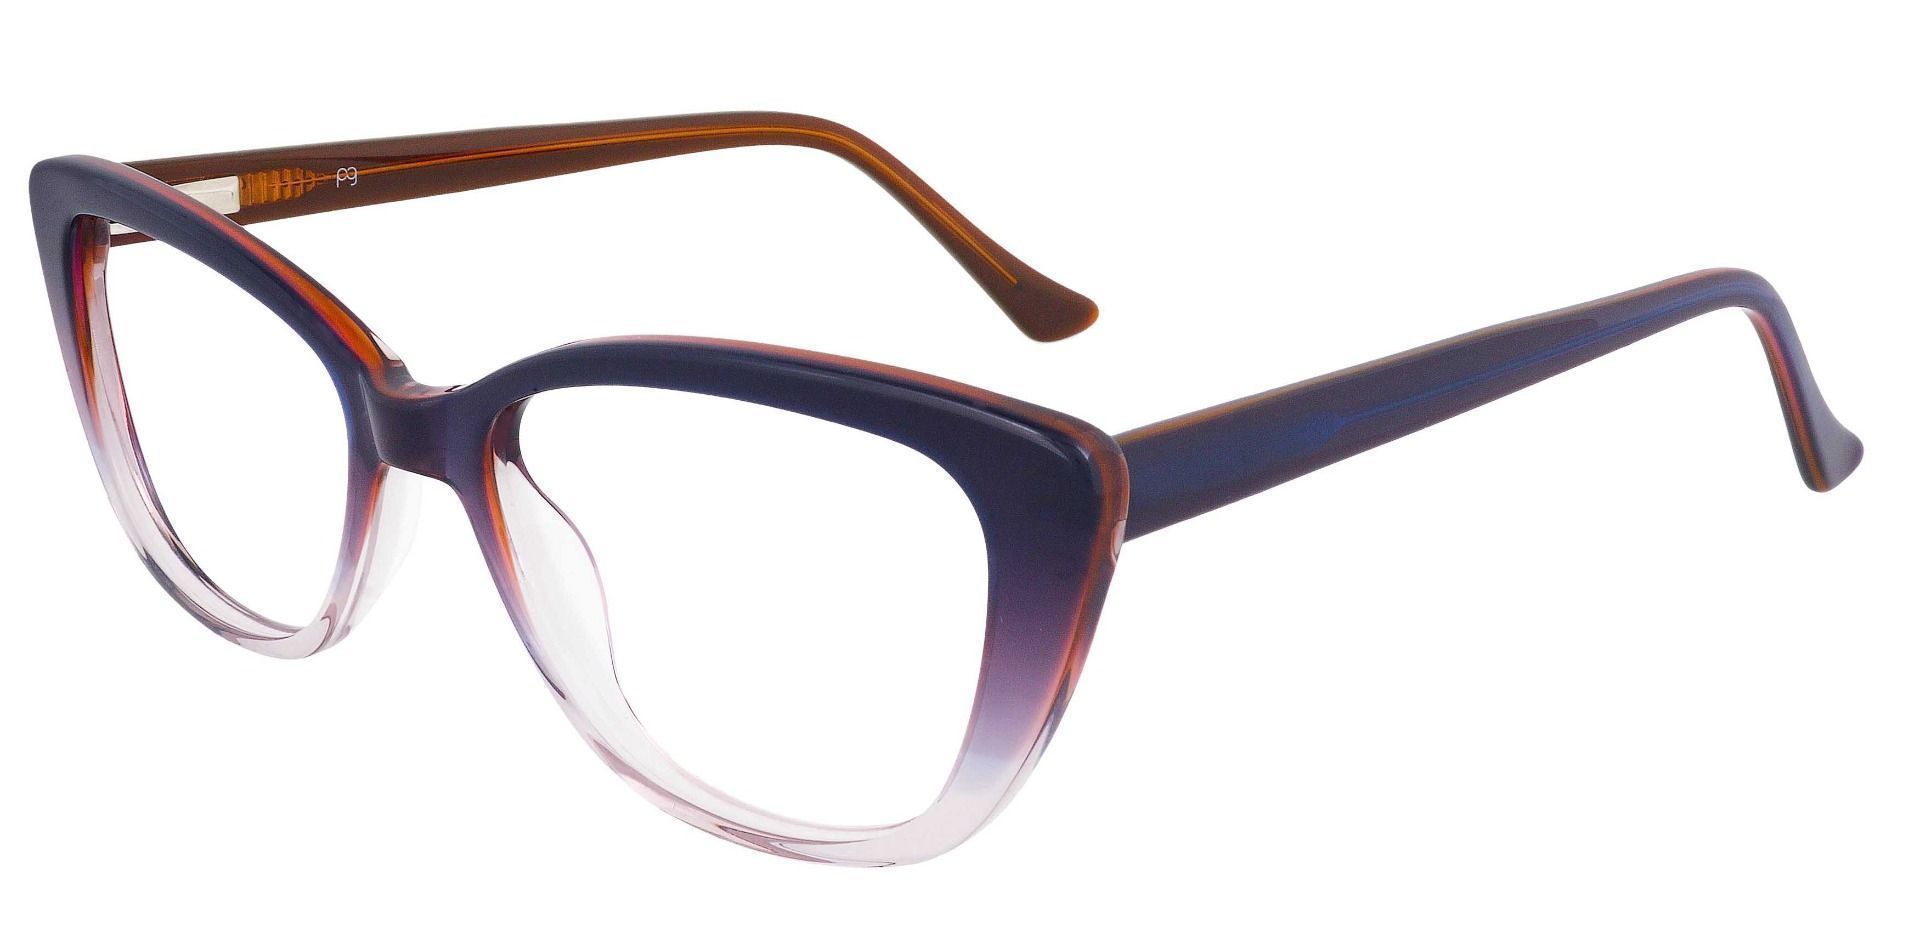 Athena Cat-Eye Lined Bifocal Glasses - Multi Color